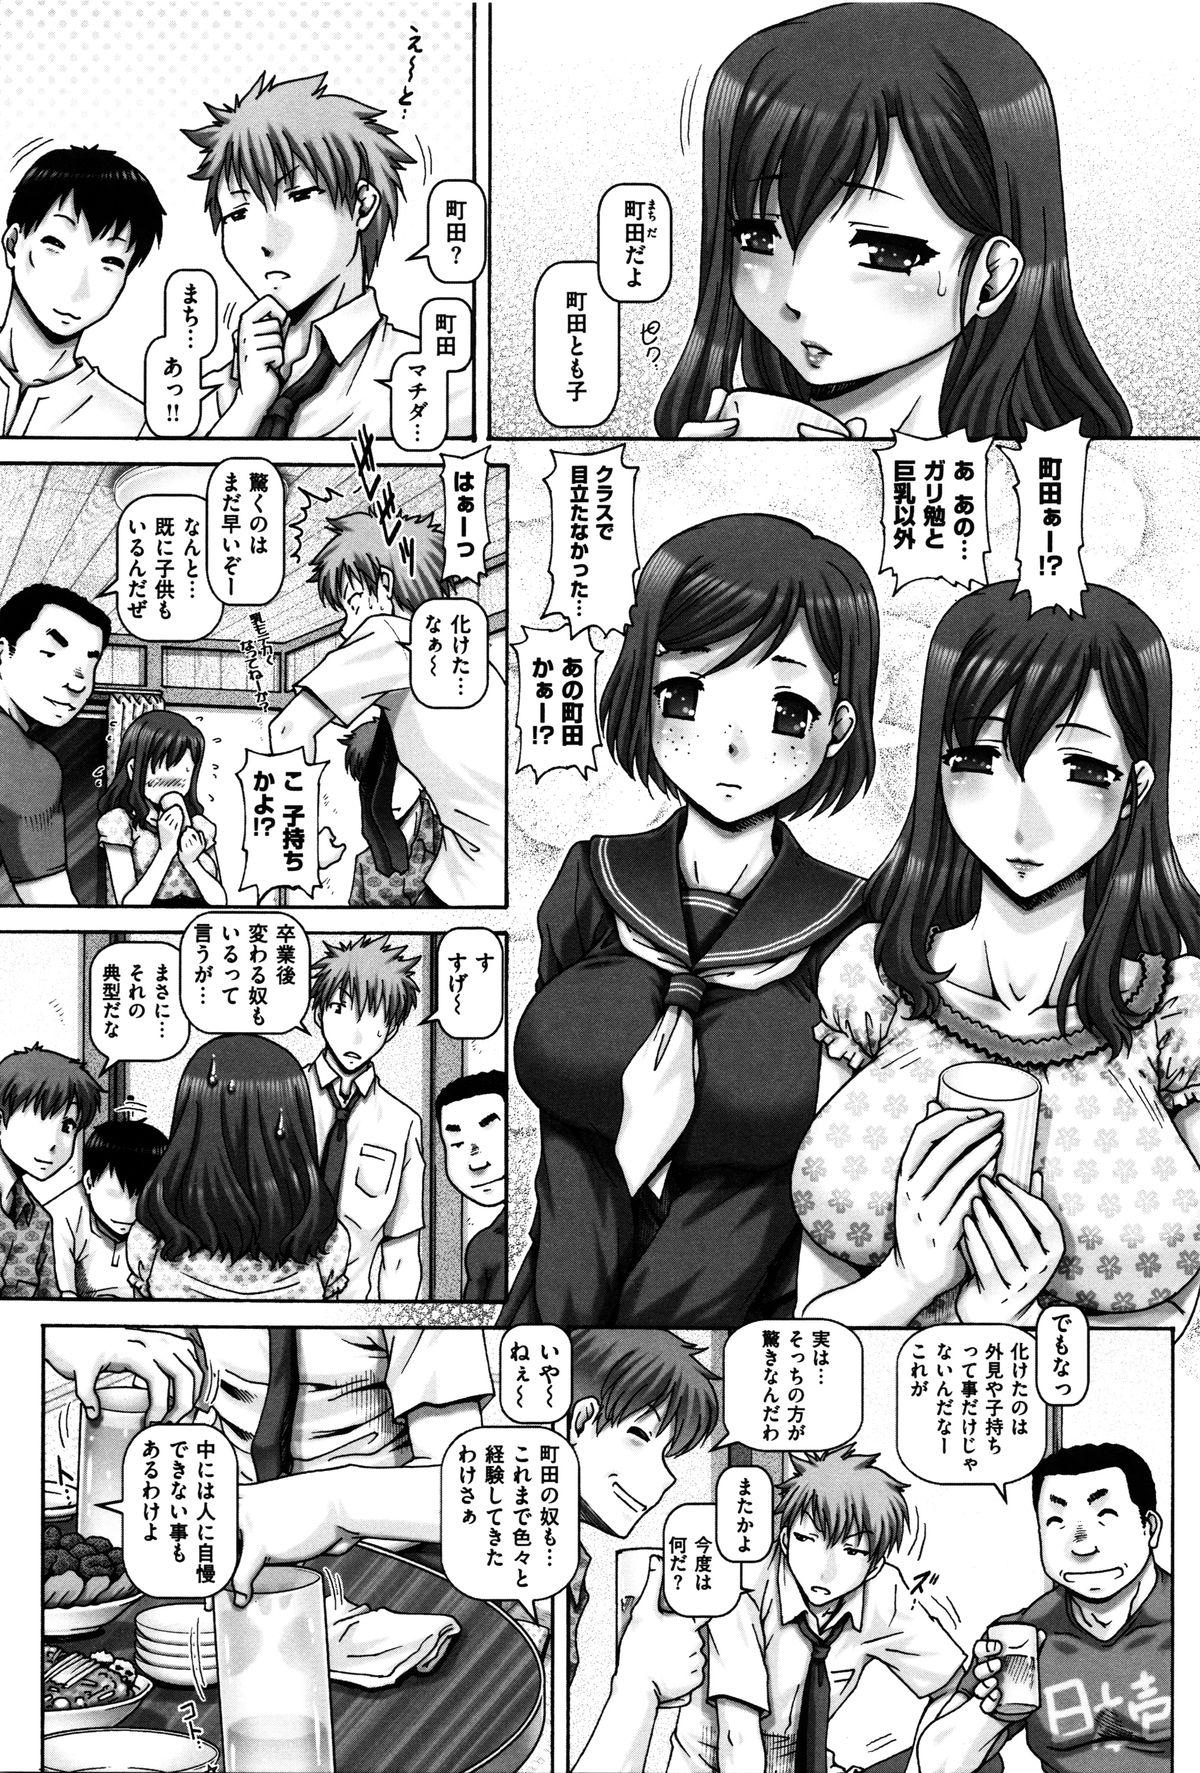 Hard Core Sex Kachiku Ane - chapter 1,5,7 & 9 Boobies - Page 4